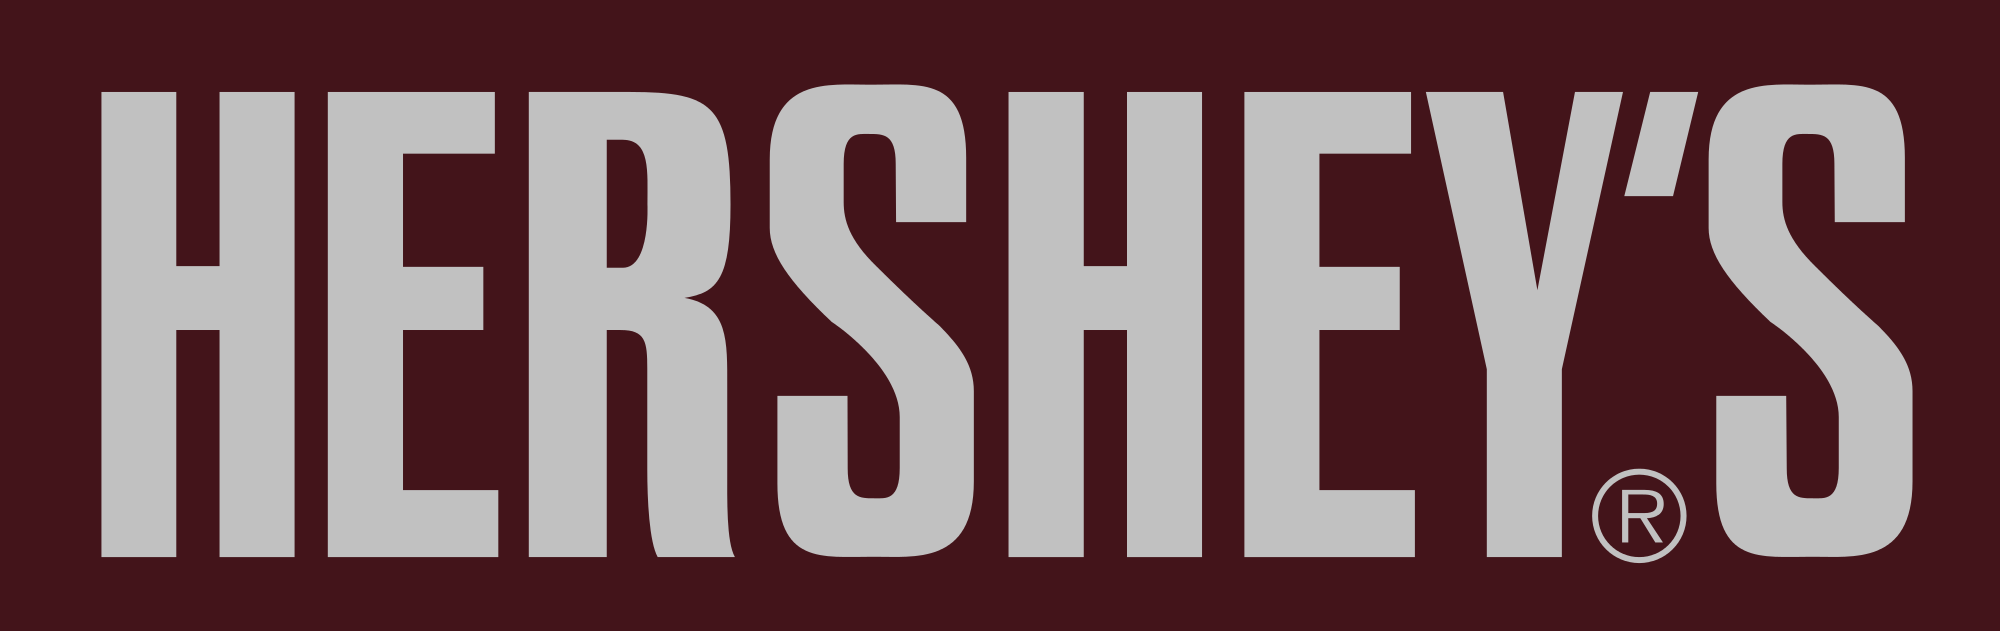 Hershey Logo - File:Hershey logo.svg - Wikimedia Commons